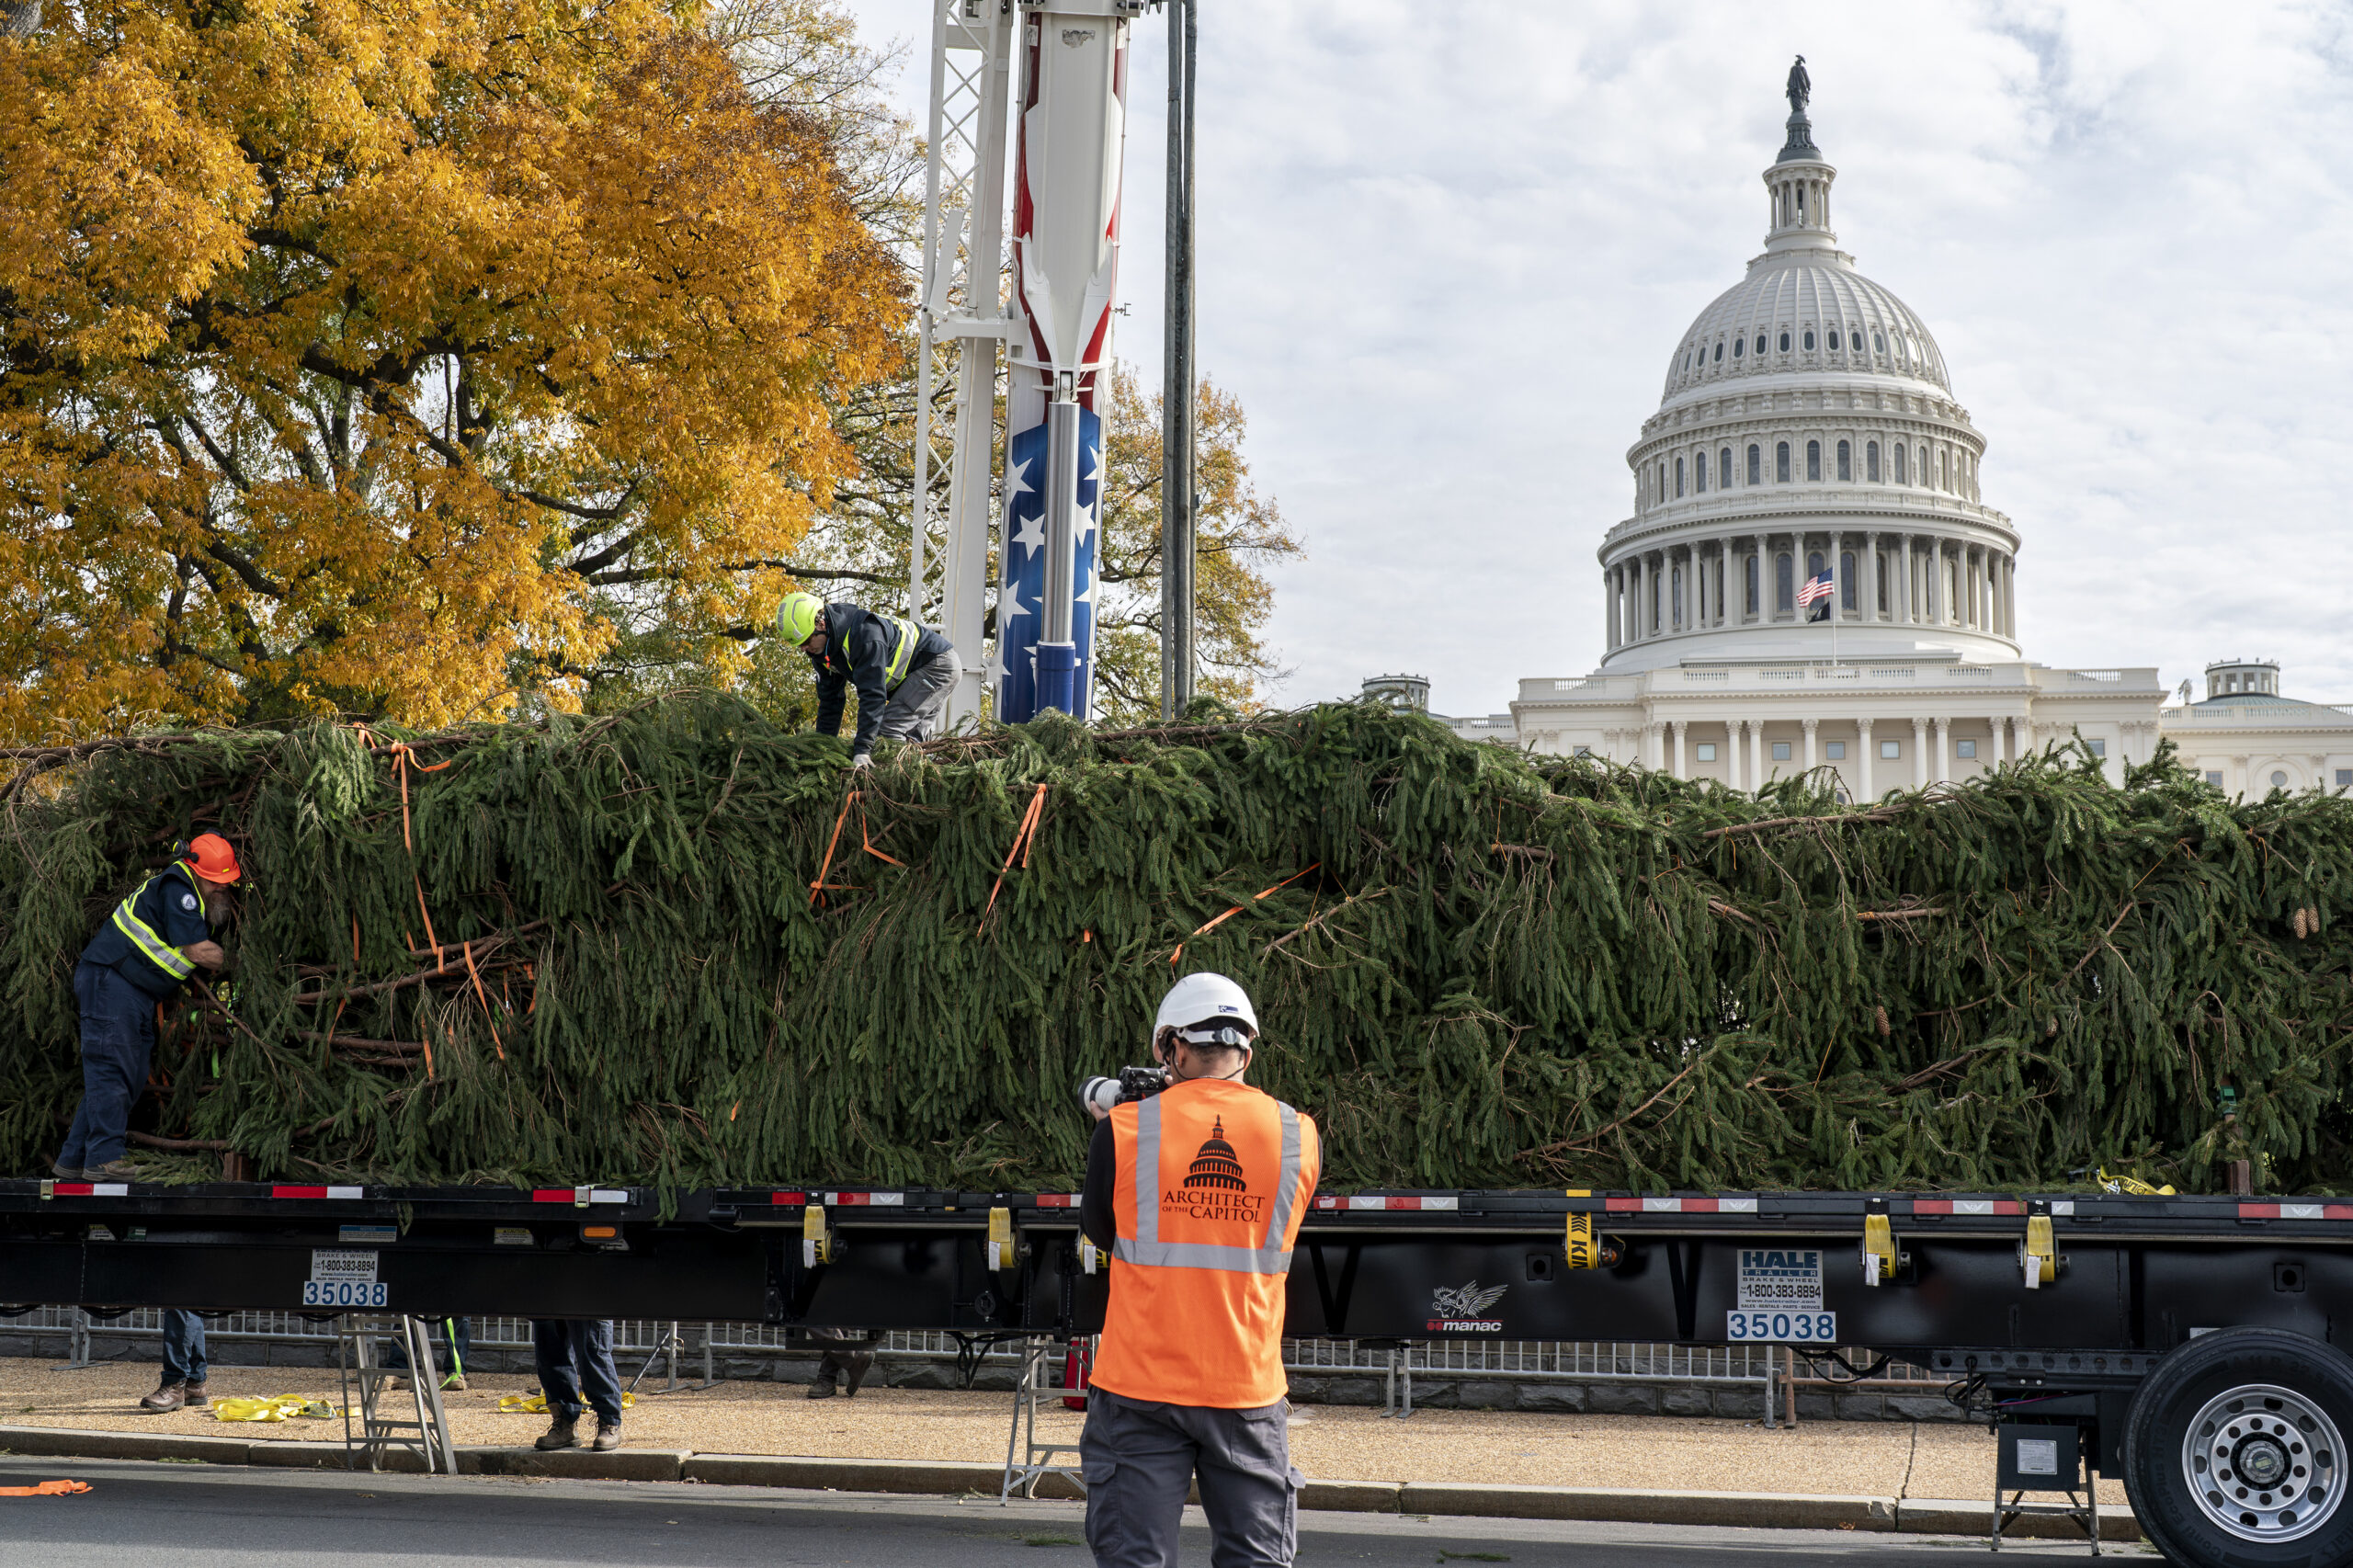 Capitol Christmas tree arrives in Washington Washington Examiner